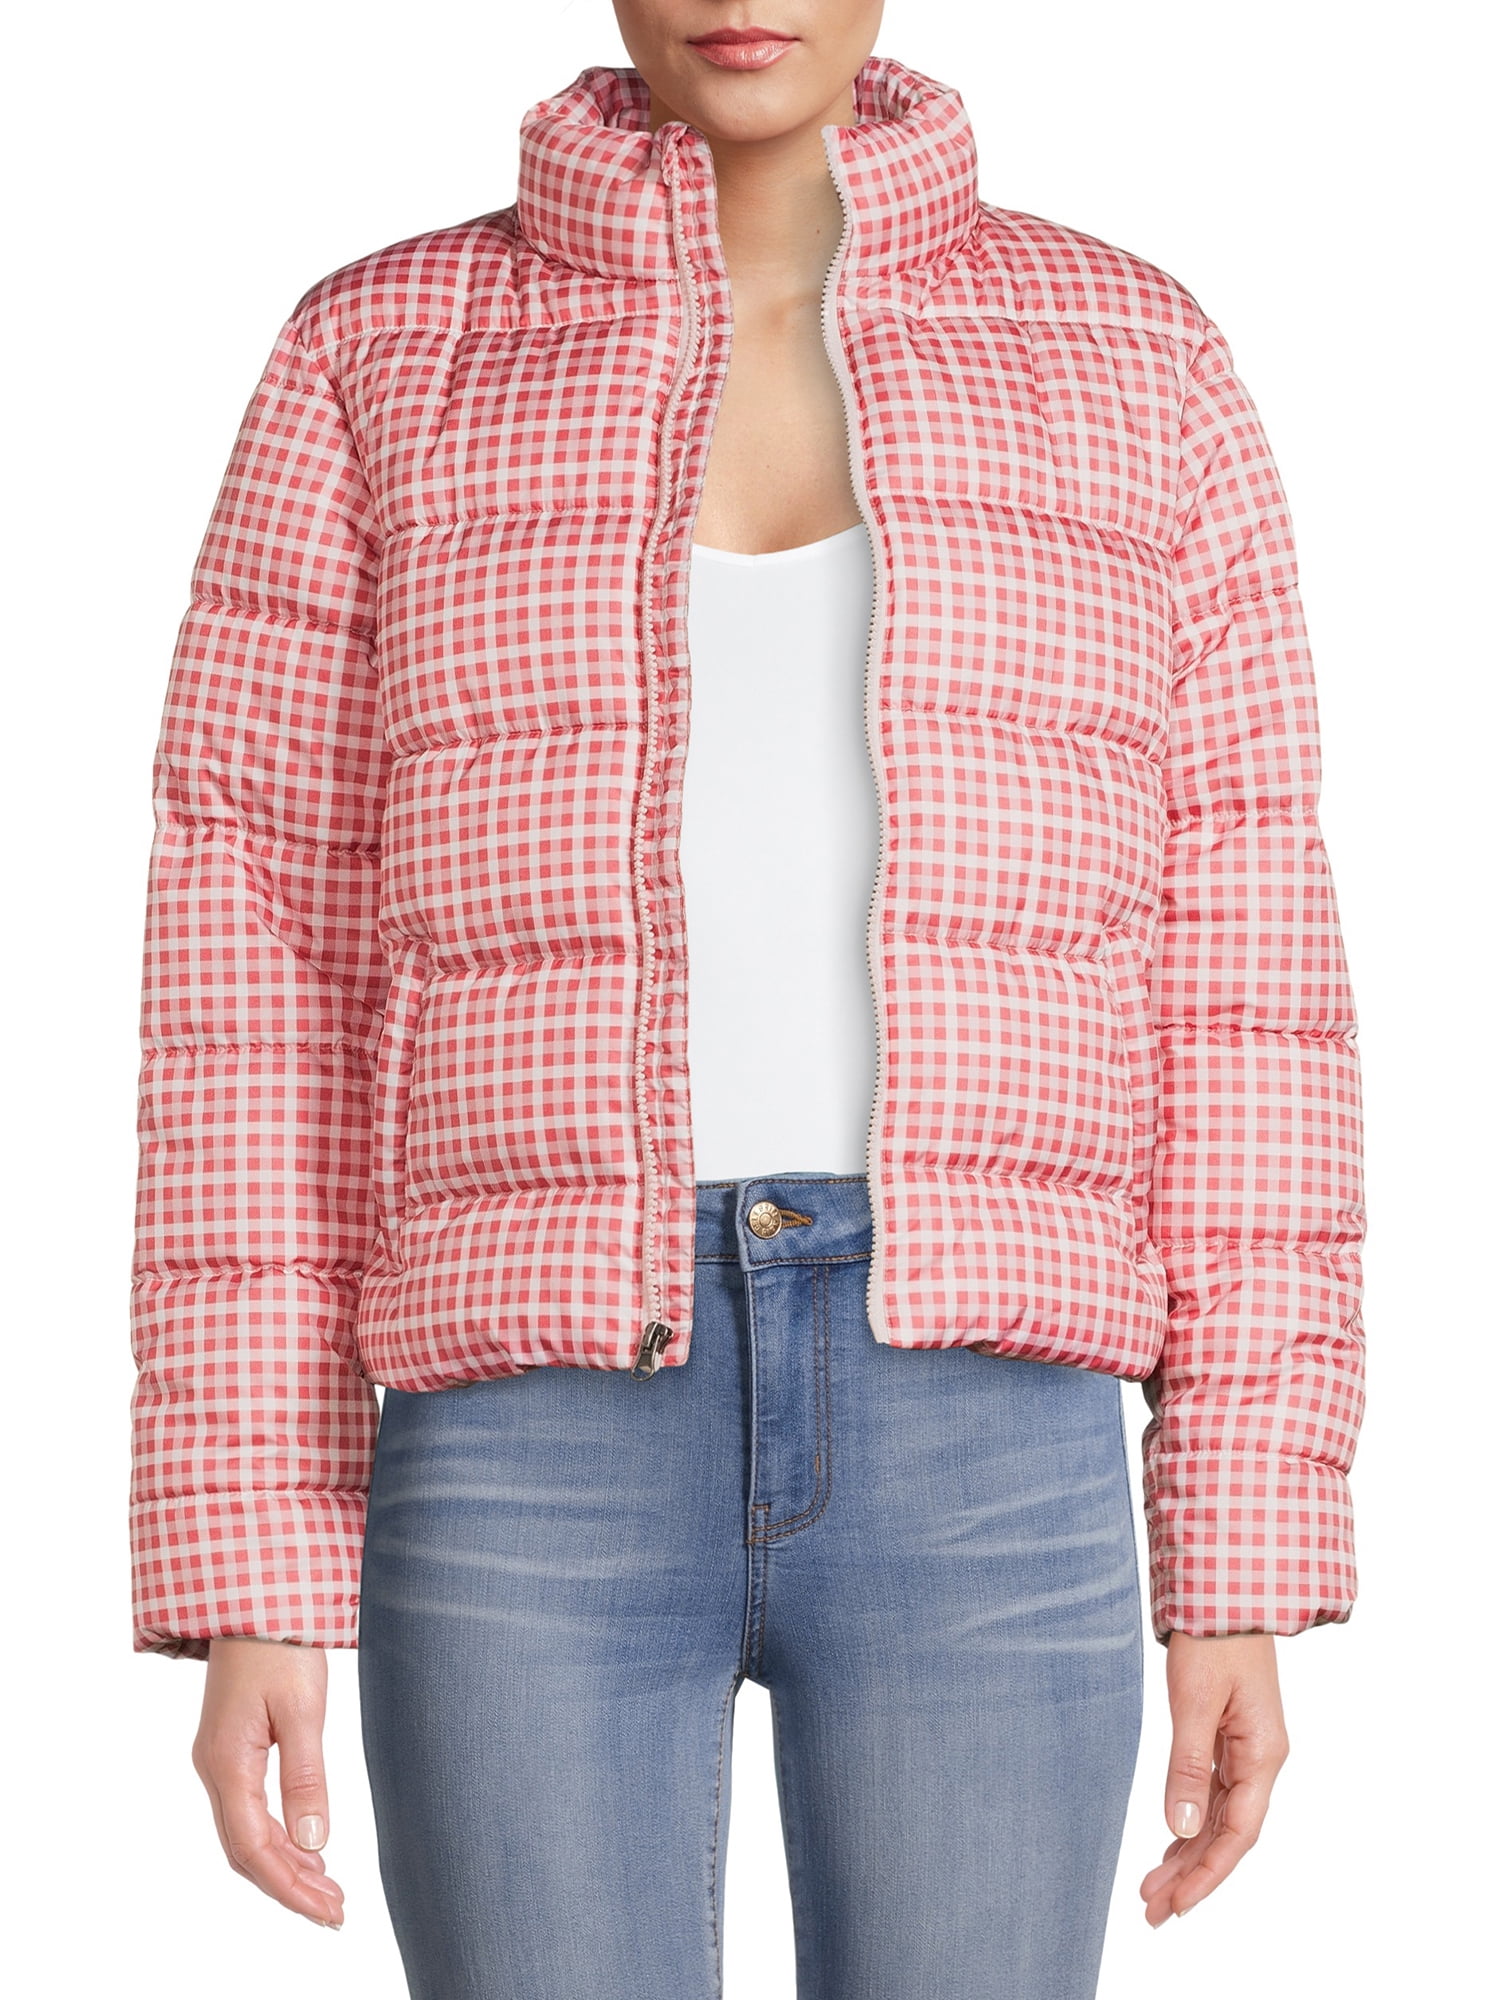 Monogram Mink Sleeveless Peplum Jacket - Women - Ready-to-Wear